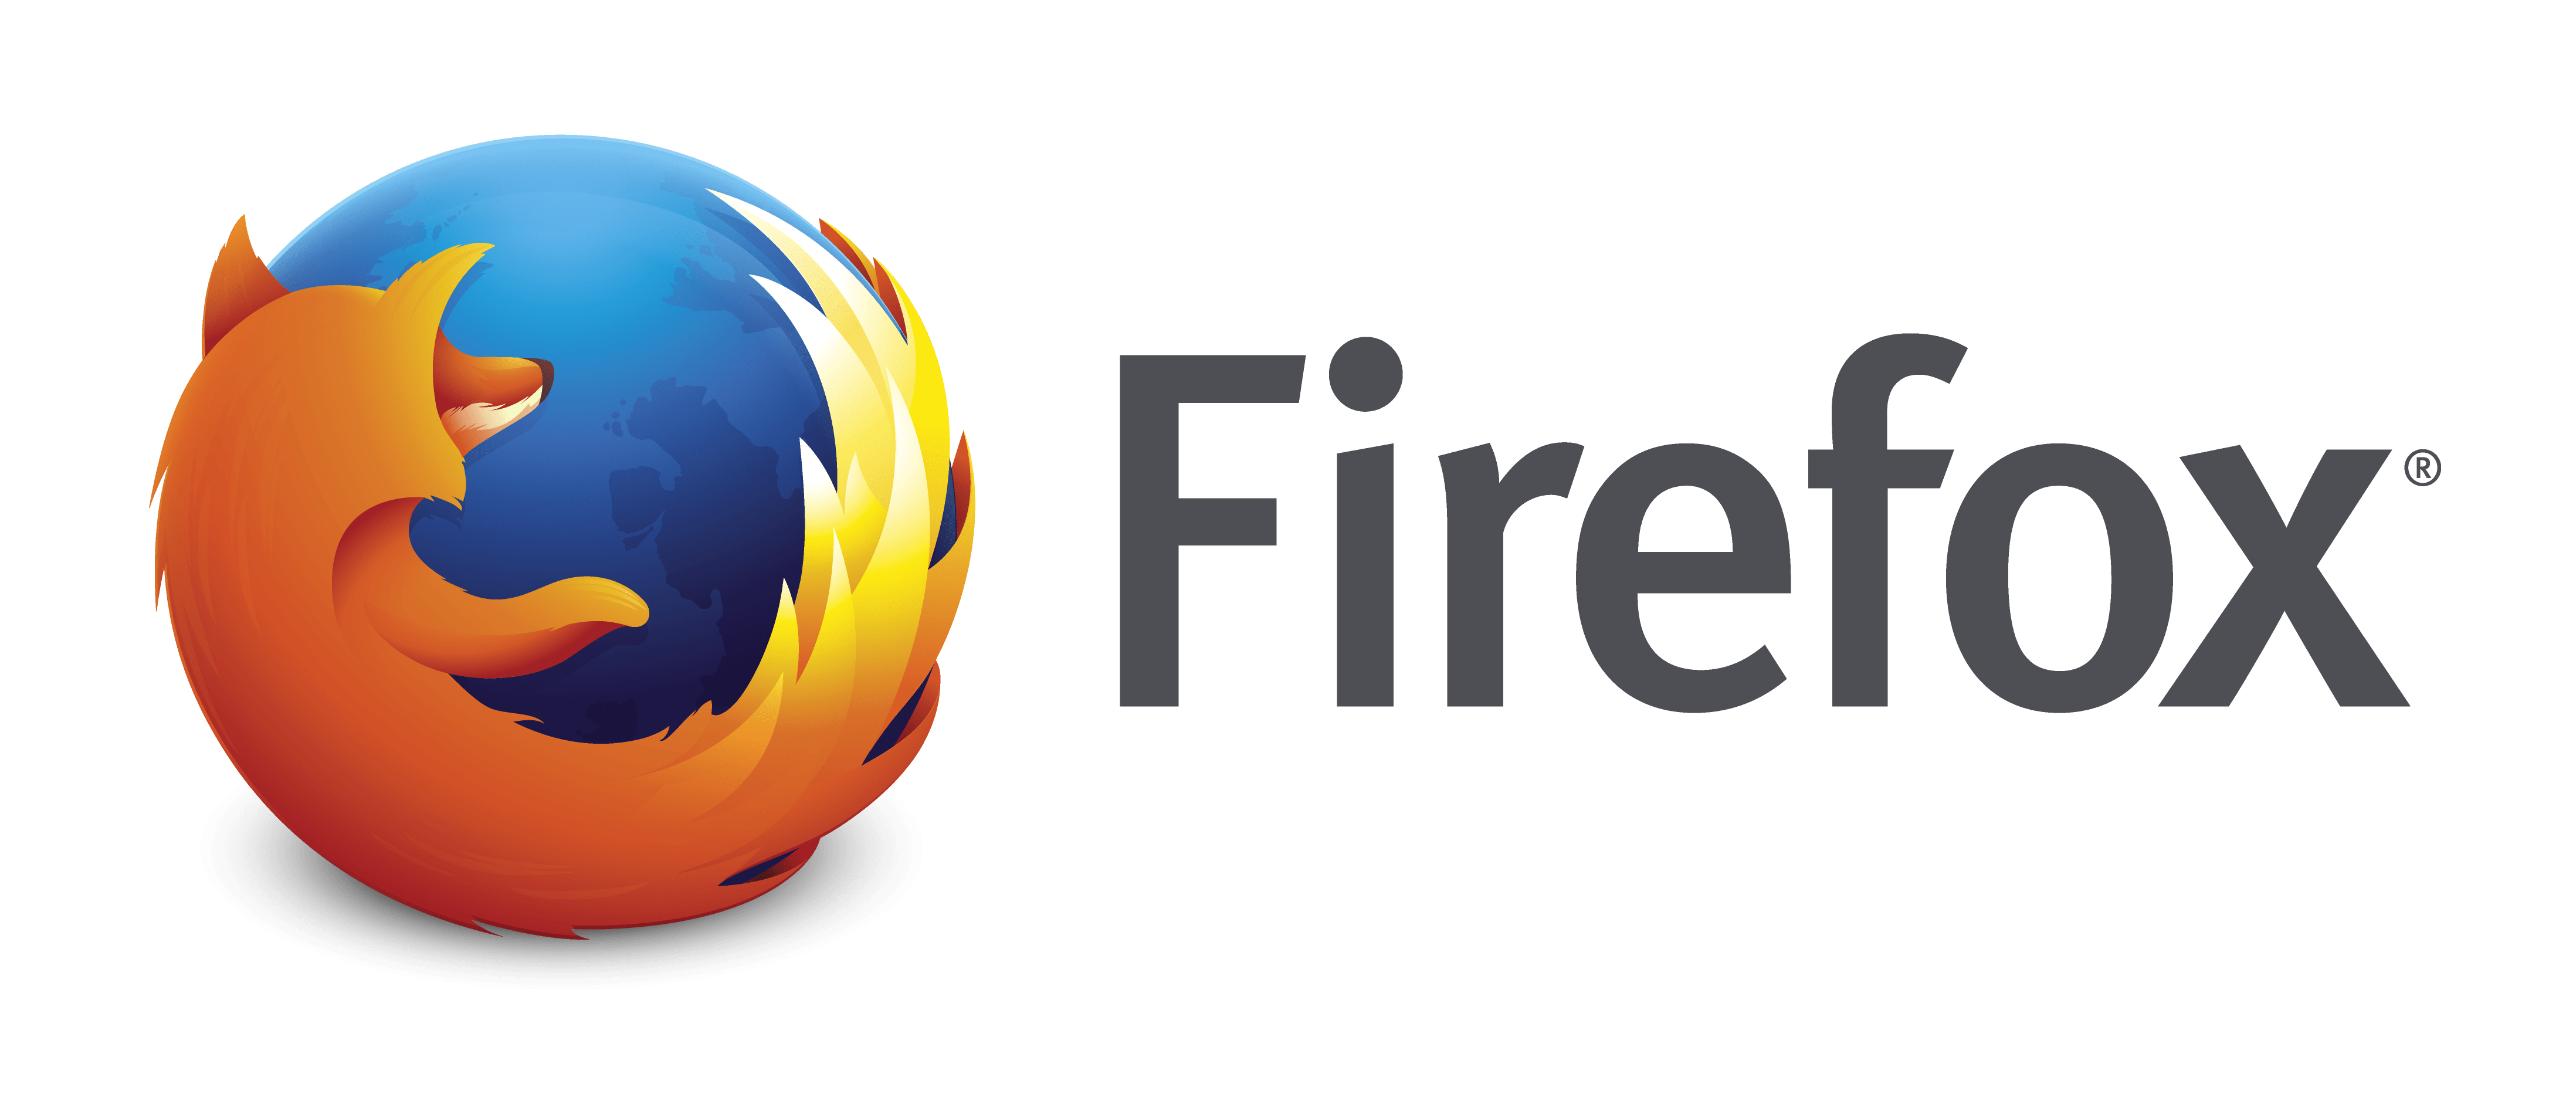 Mozilla Firefox PNG - 115044